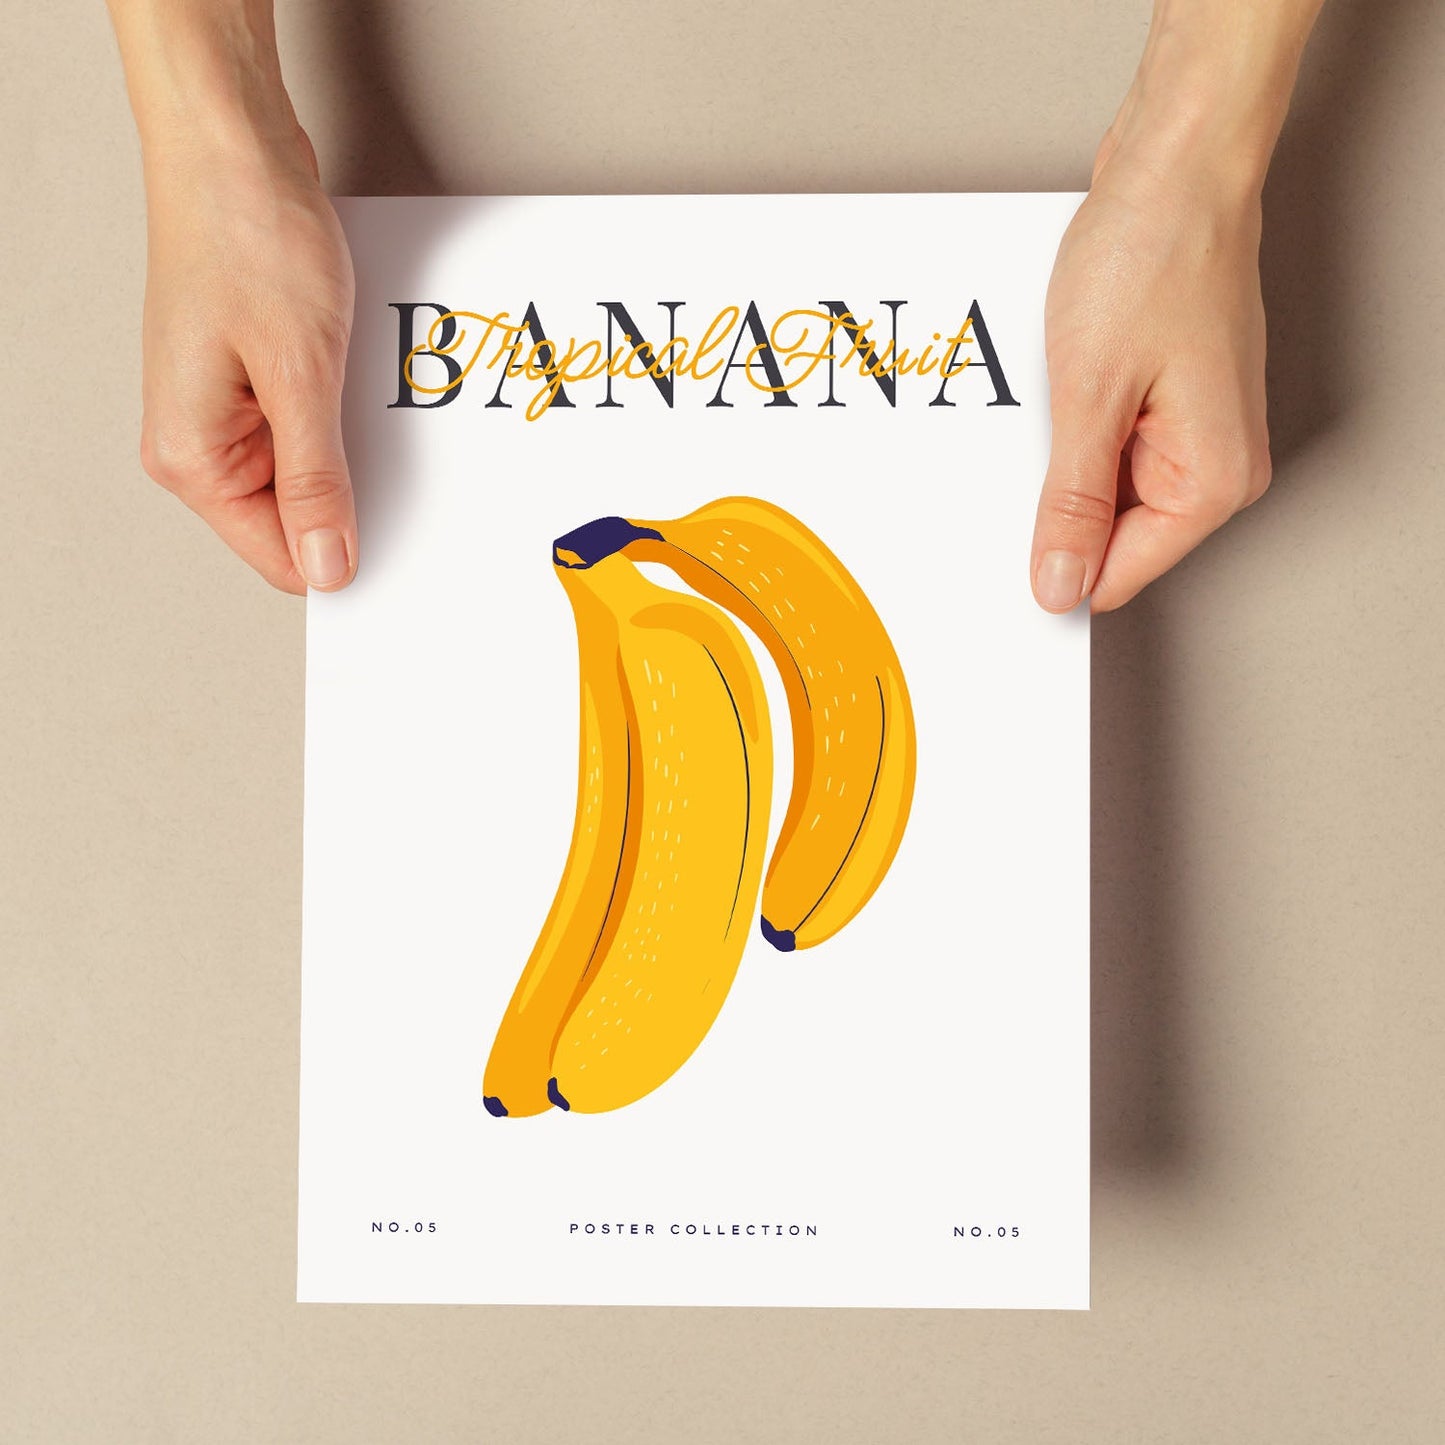 Banana-Artwork-Nacnic-Nacnic Estudio SL